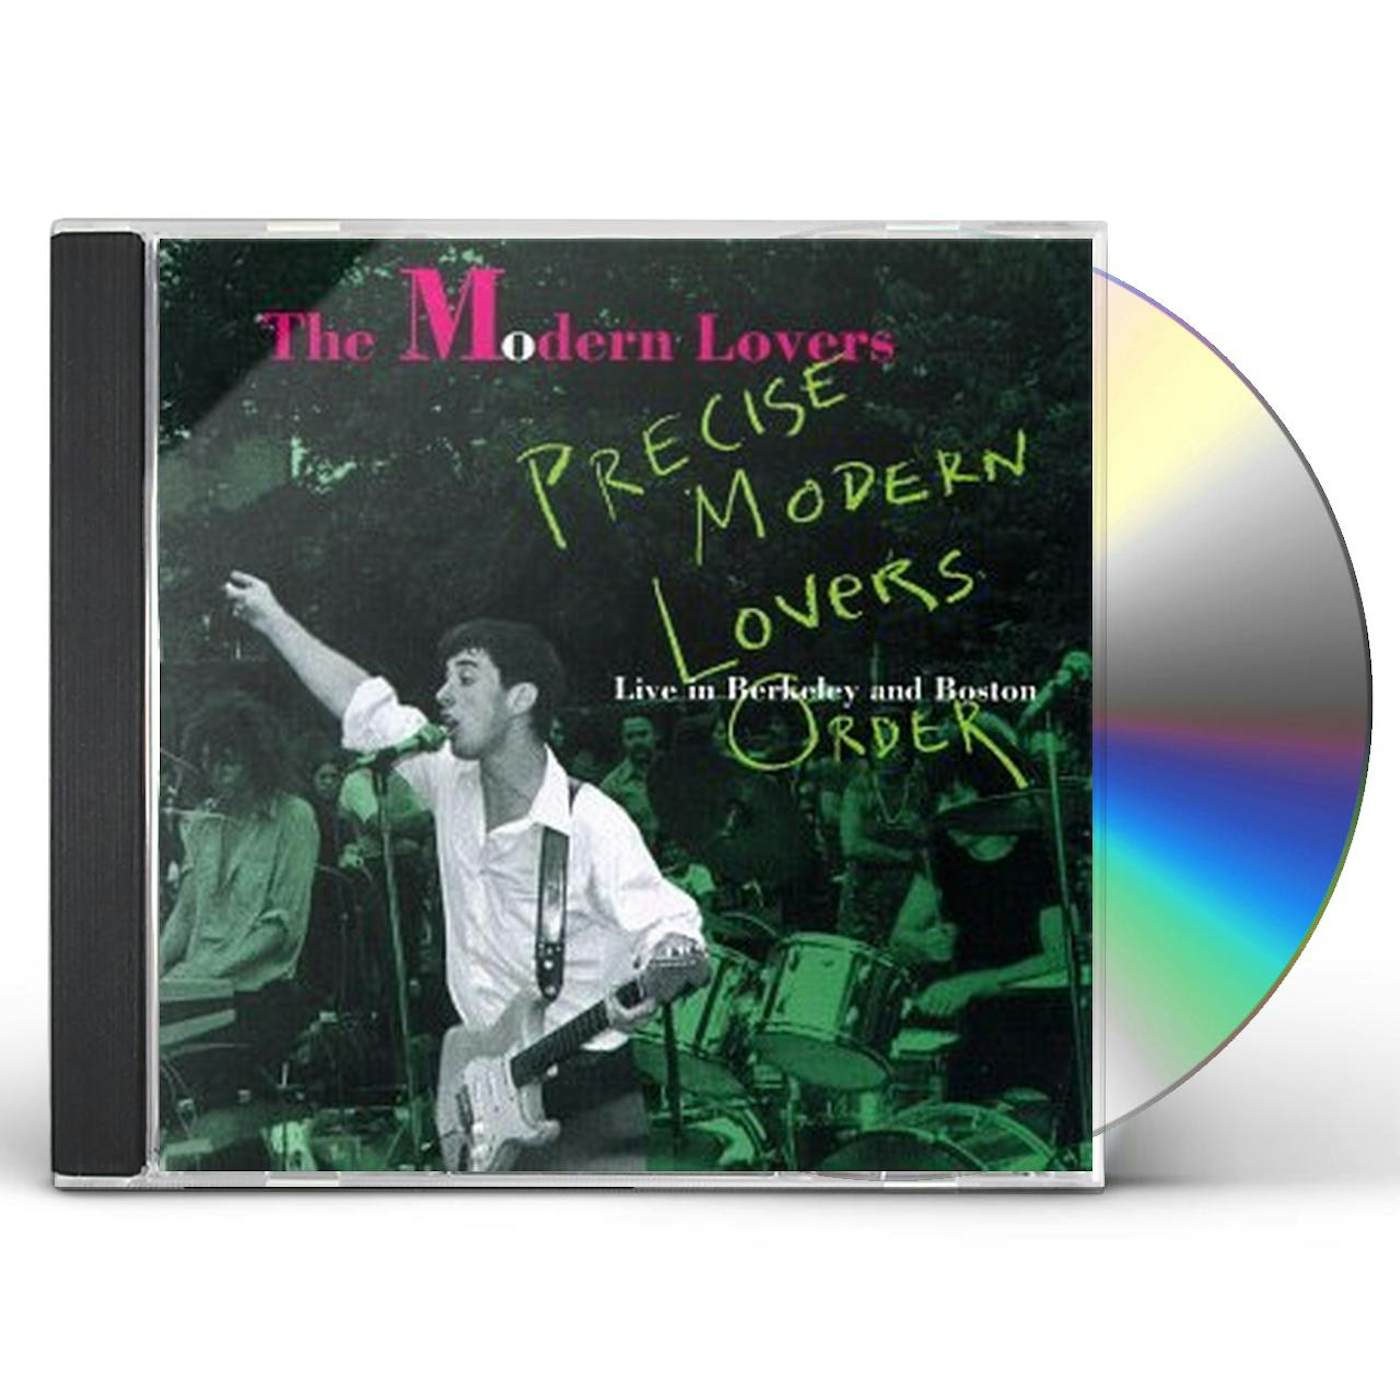 Jonathan Richman & The Modern Lovers PRECISE MODERN LOVERS ORDER CD